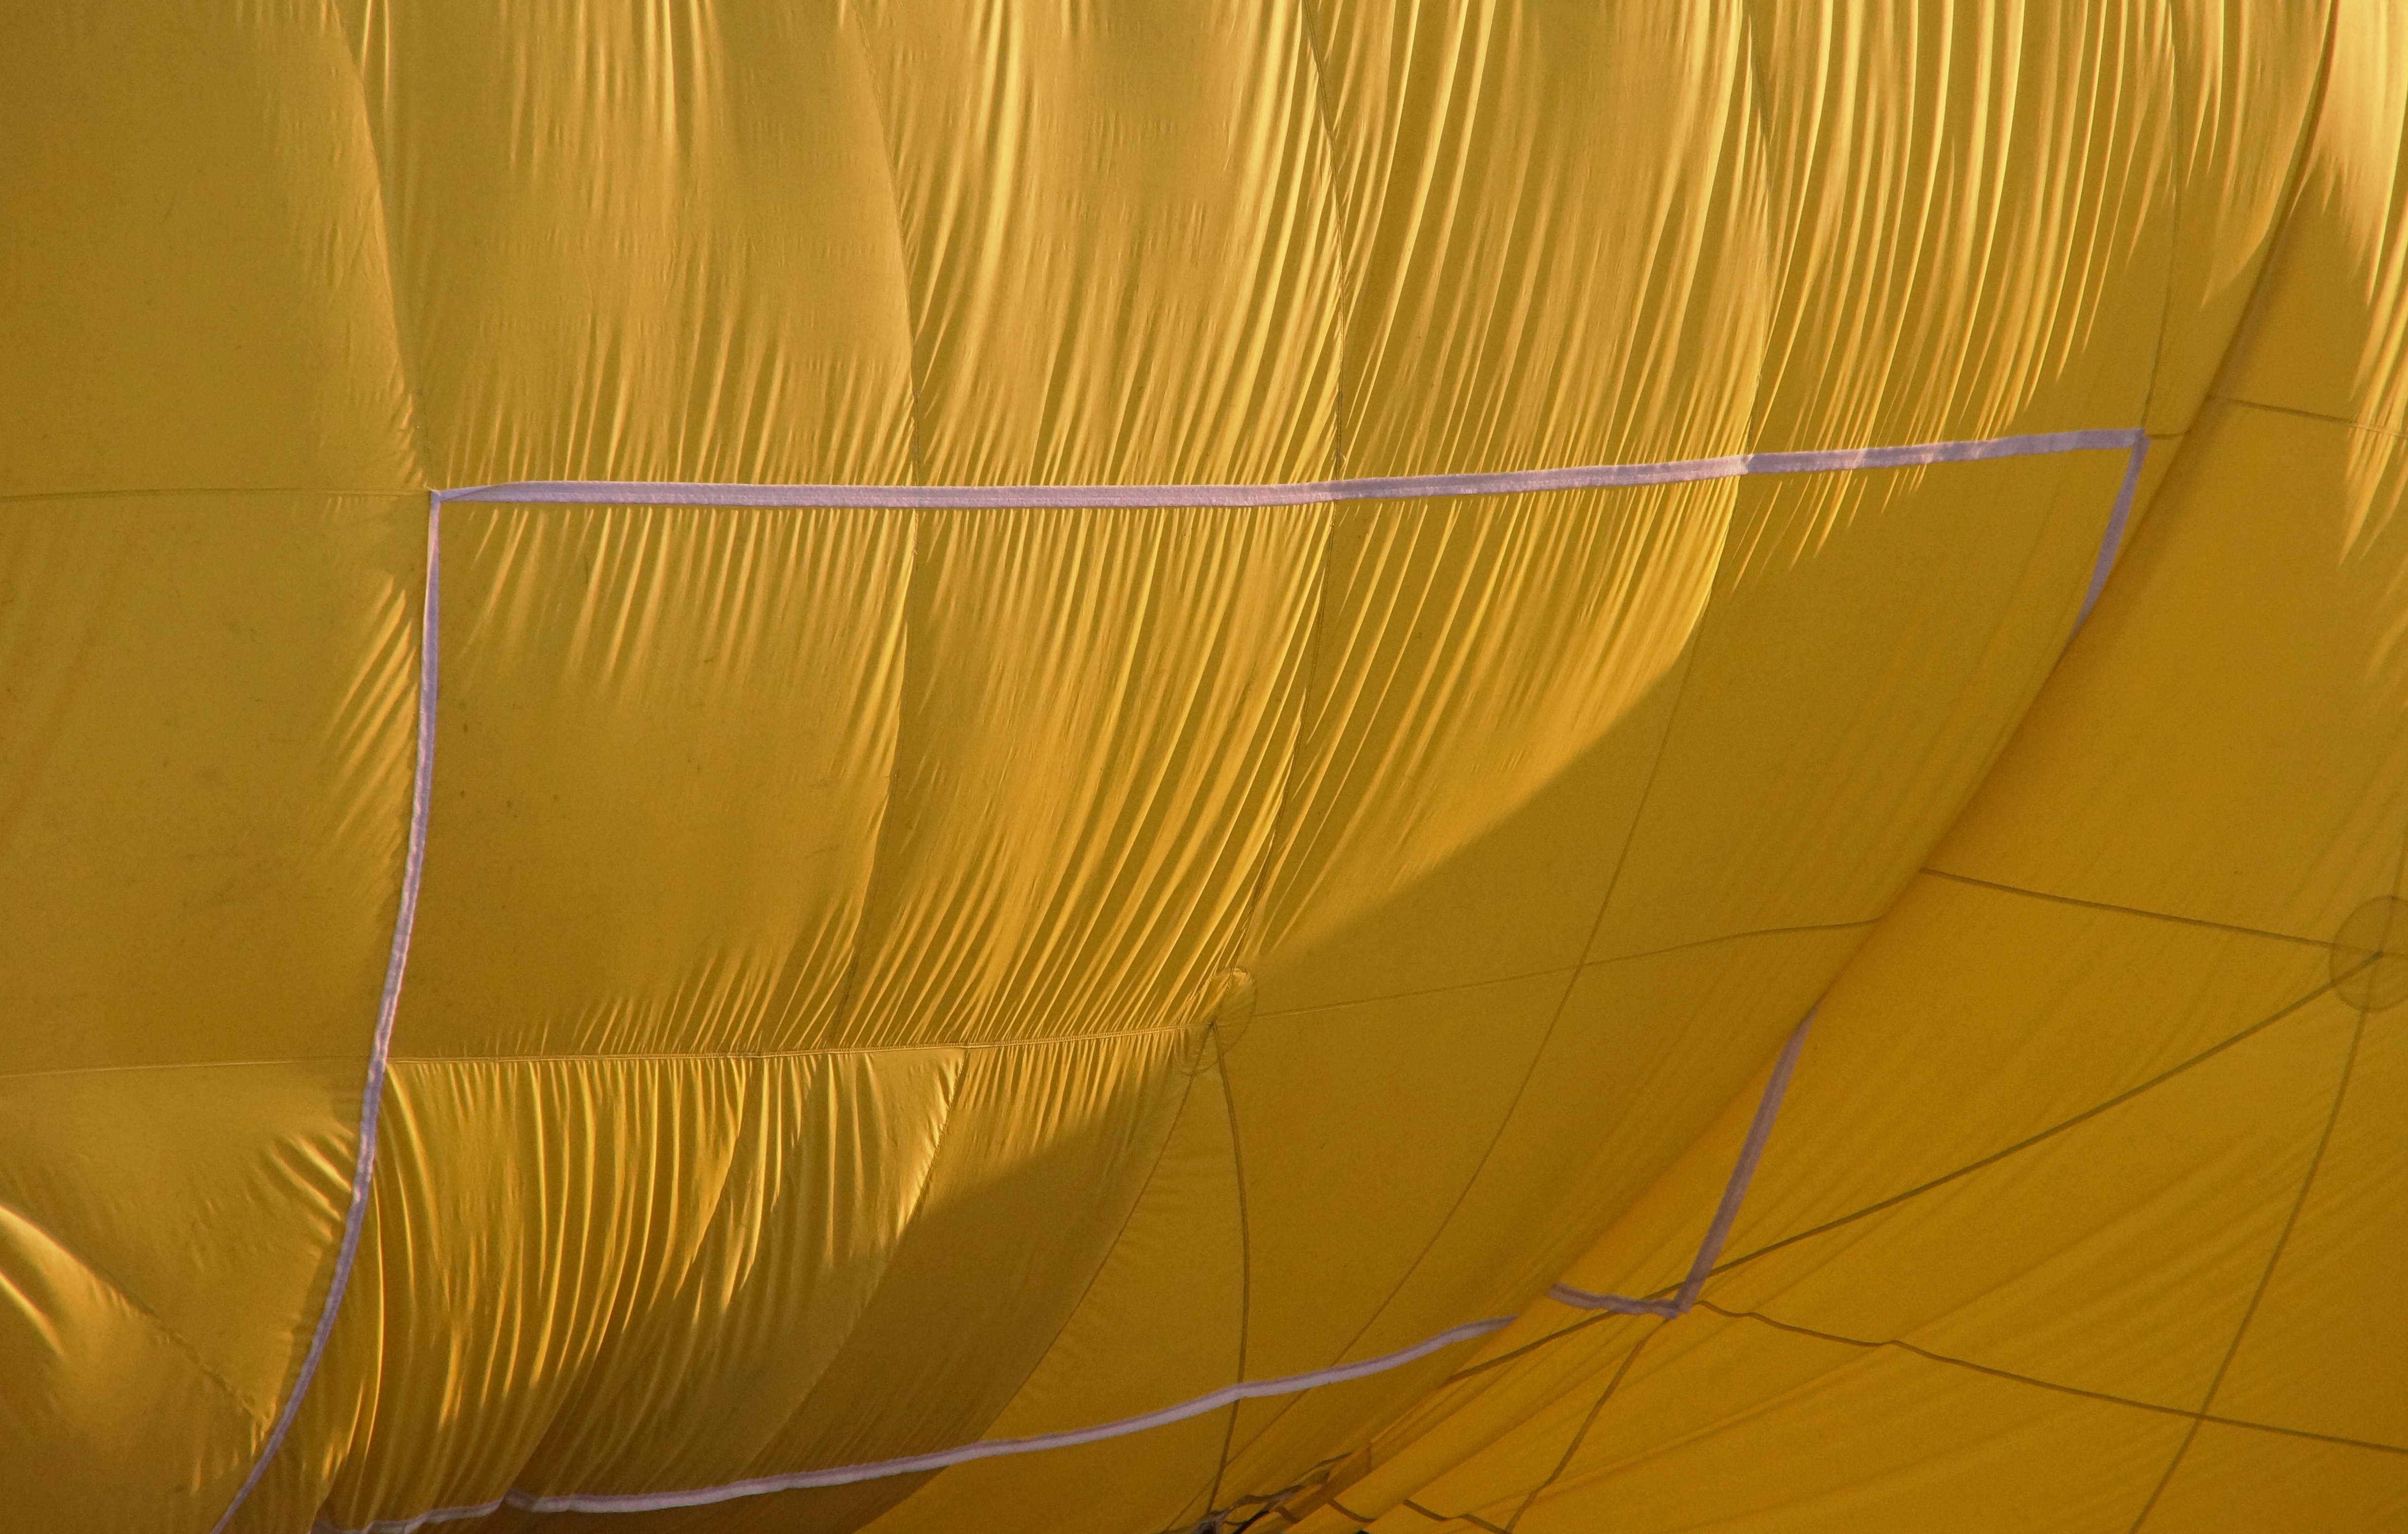 yellow hot air balloon